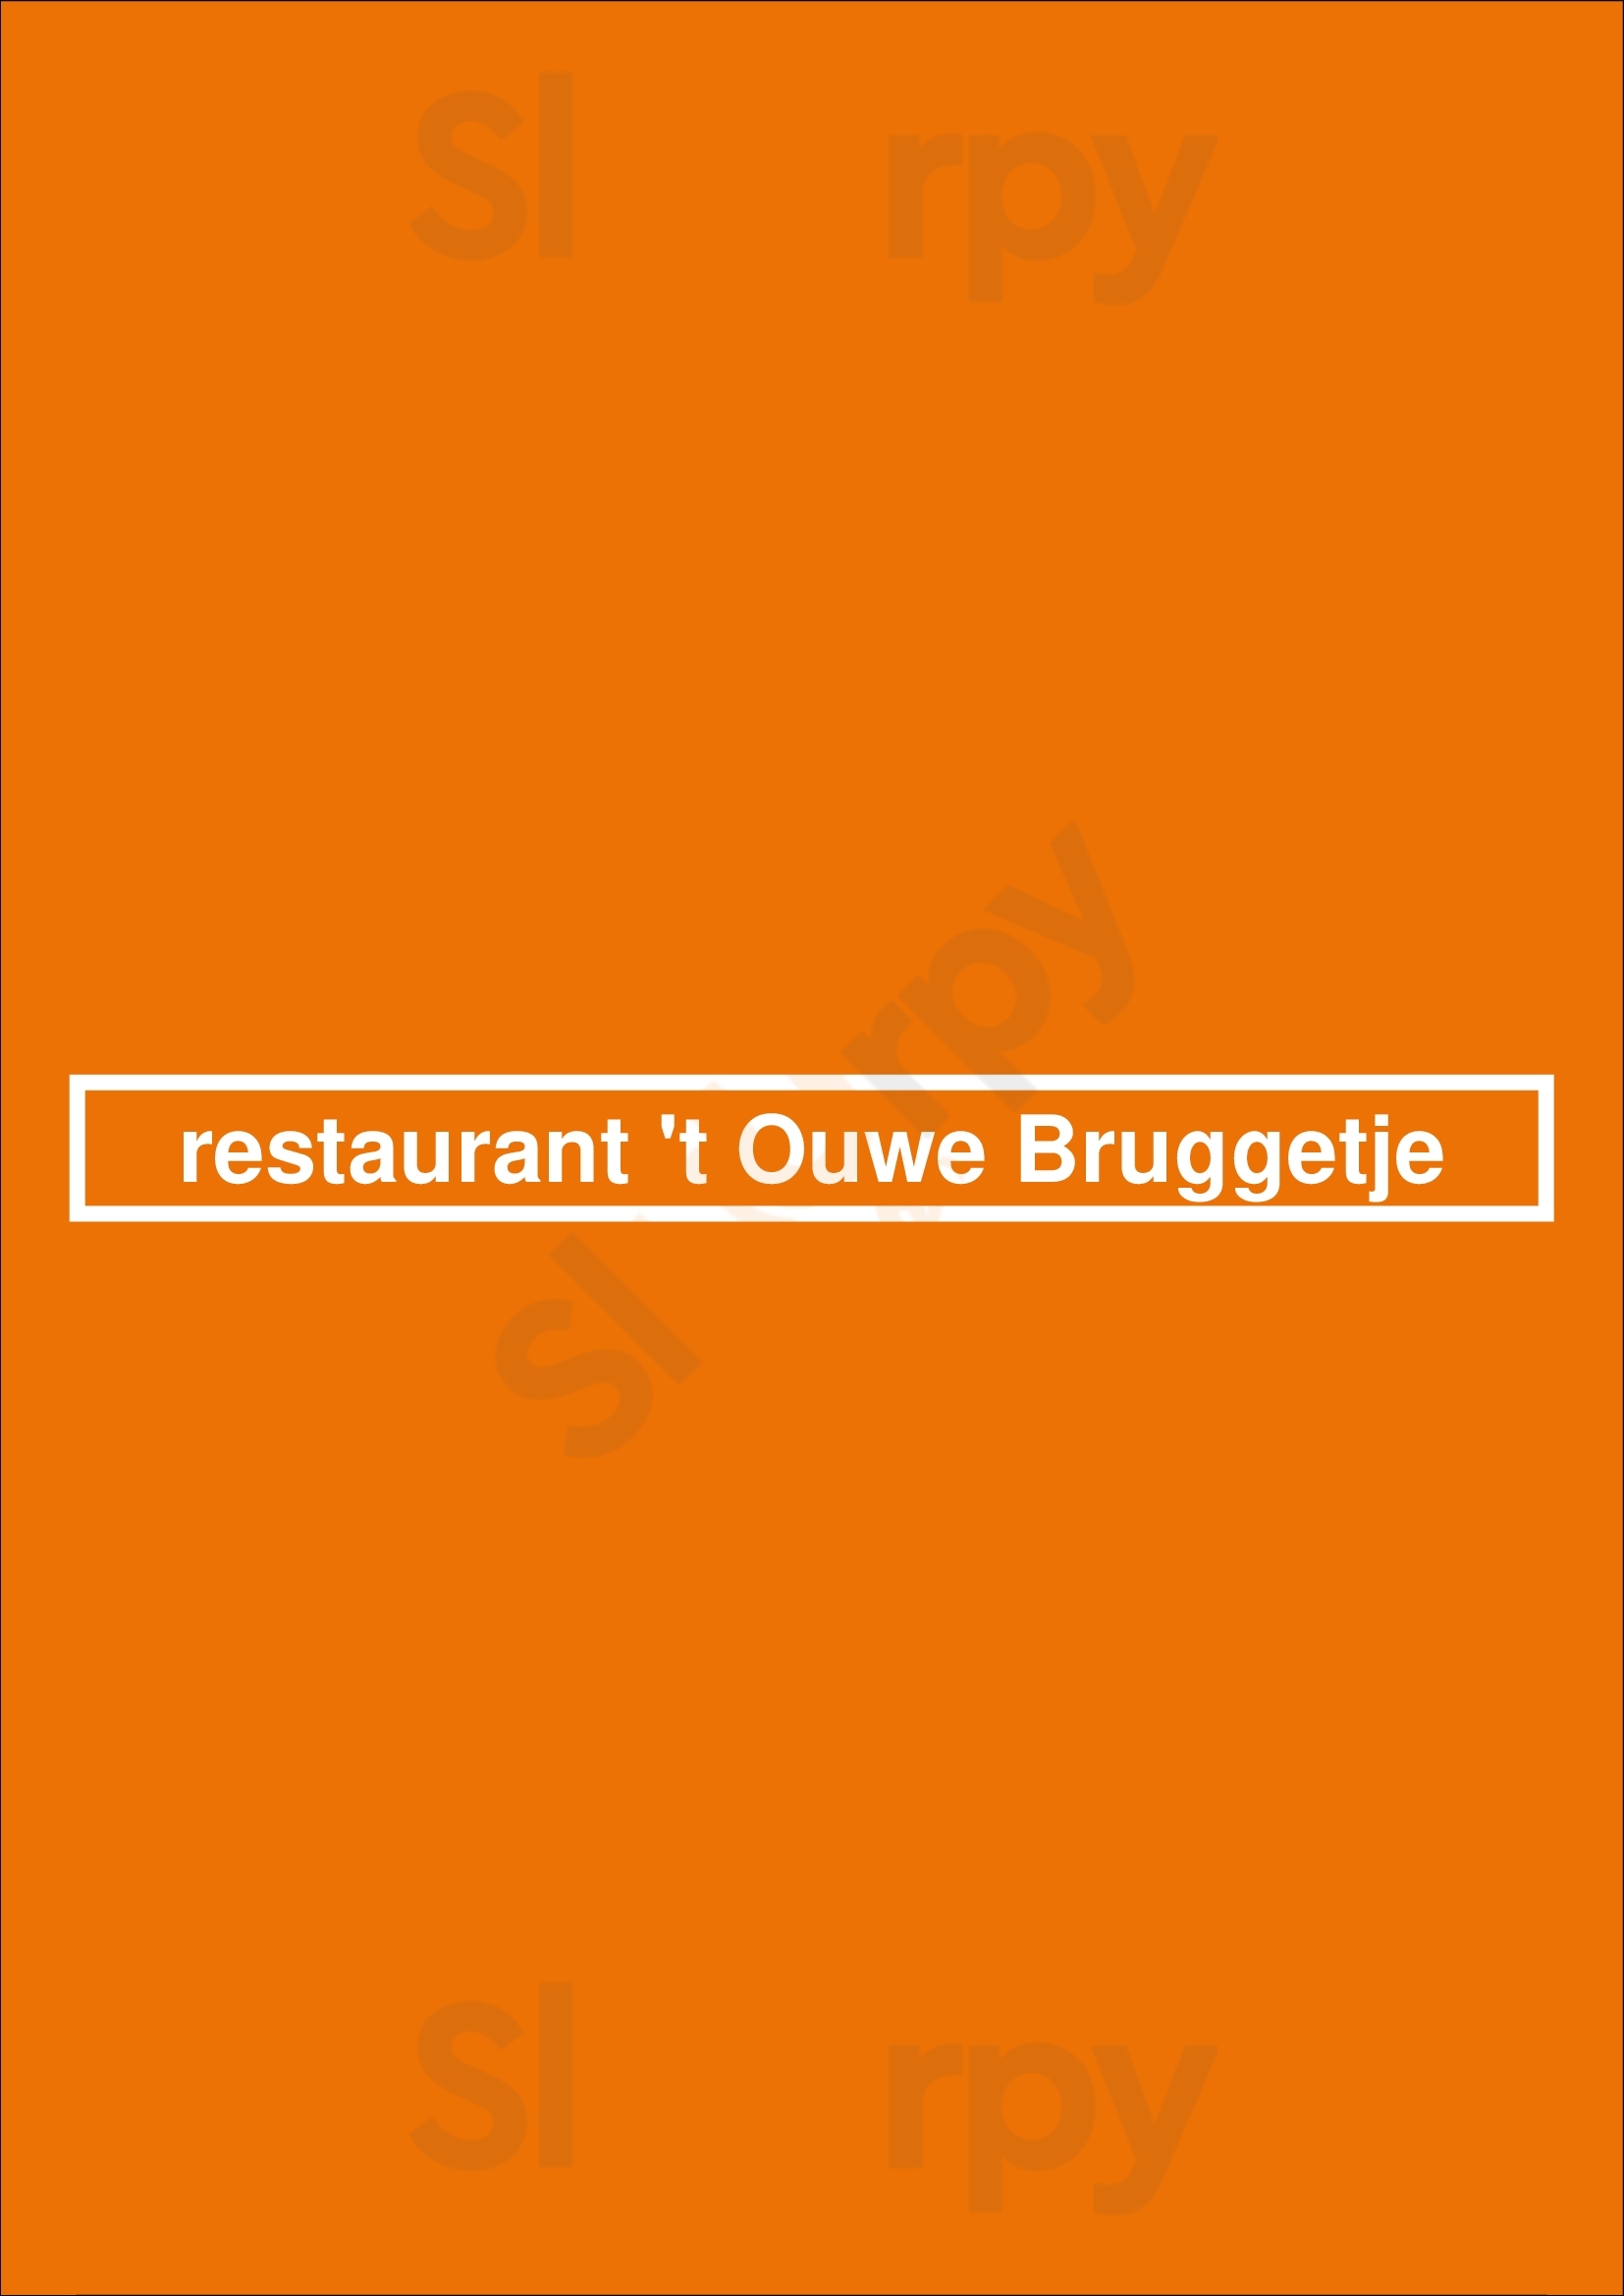 Restaurant 't Ouwe Bruggetje Rotterdam Menu - 1